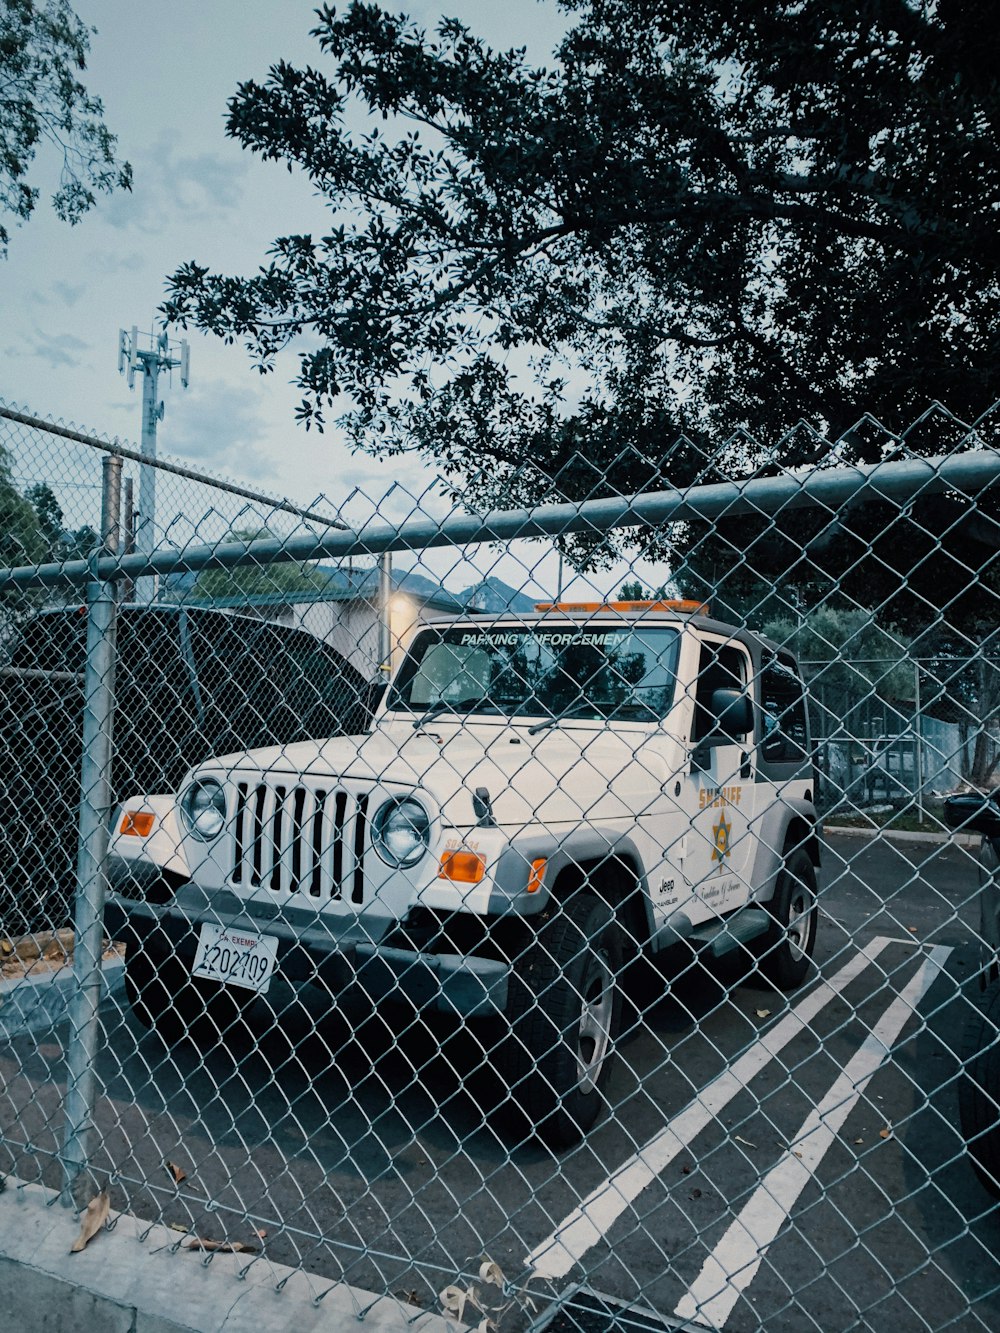 jipe branco e preto wrangler estacionado ao lado de cerca de metal cinza